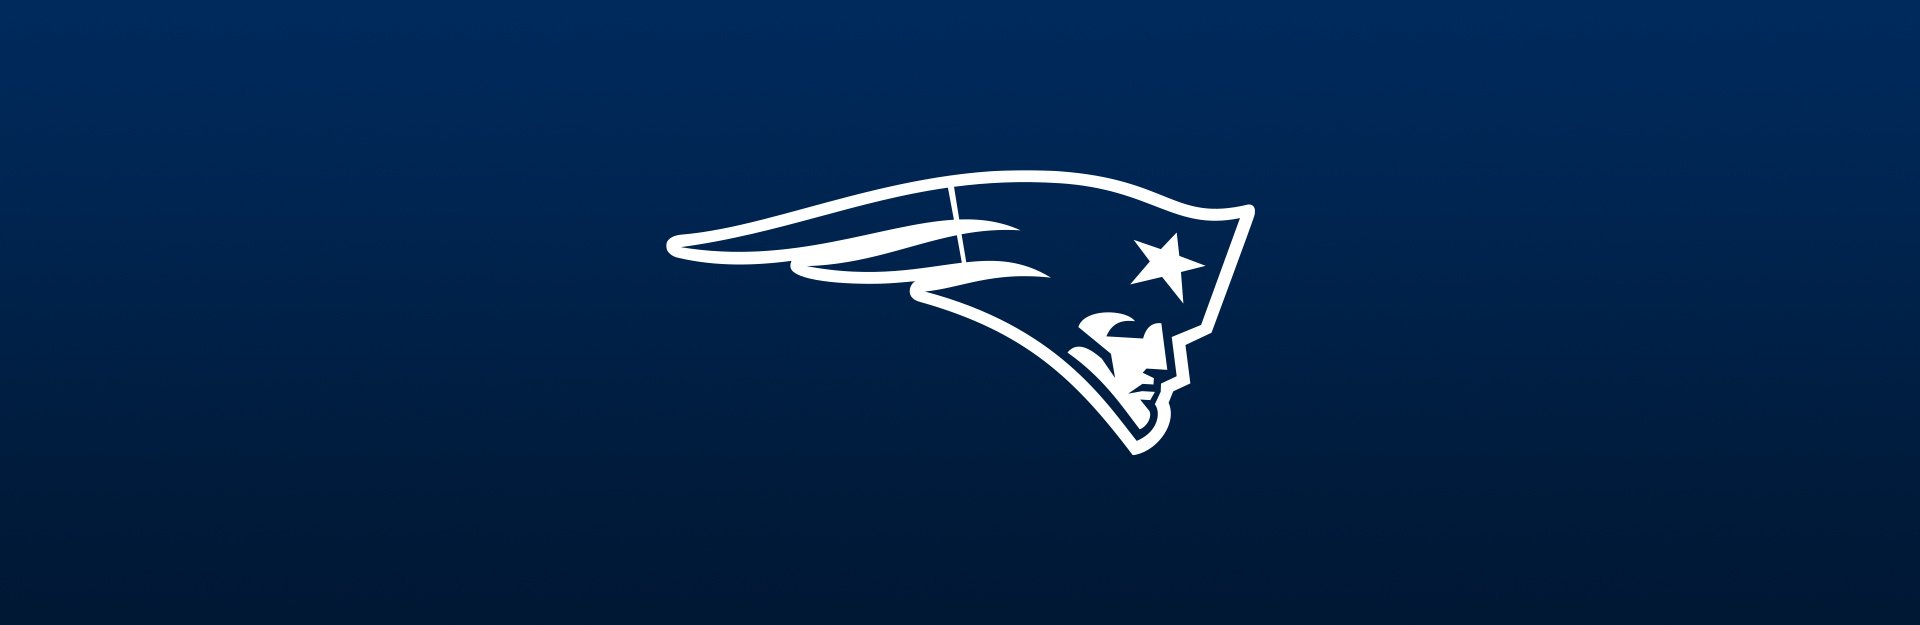 New England Patriots logo overlaid on navy blue background